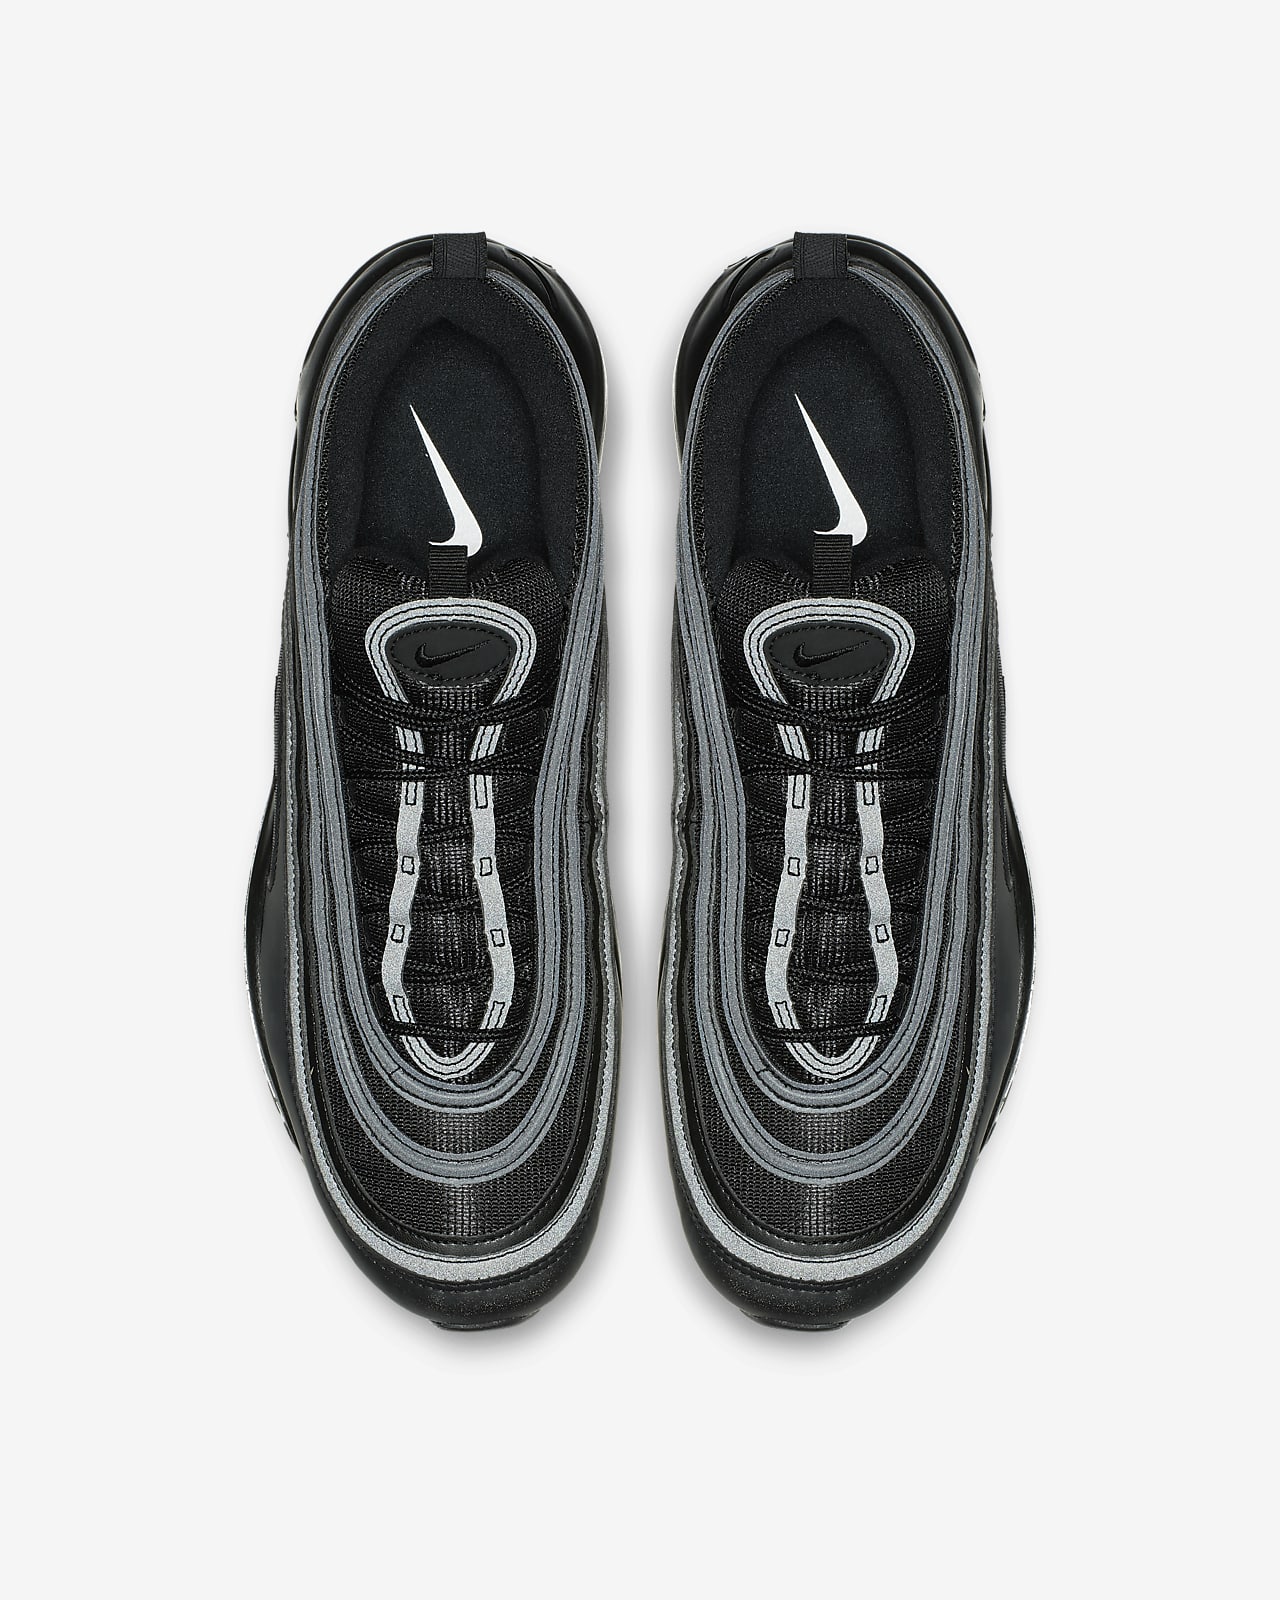 Nike Air Max Plus / 97 Men's Athletic Sneakers AV7936-100